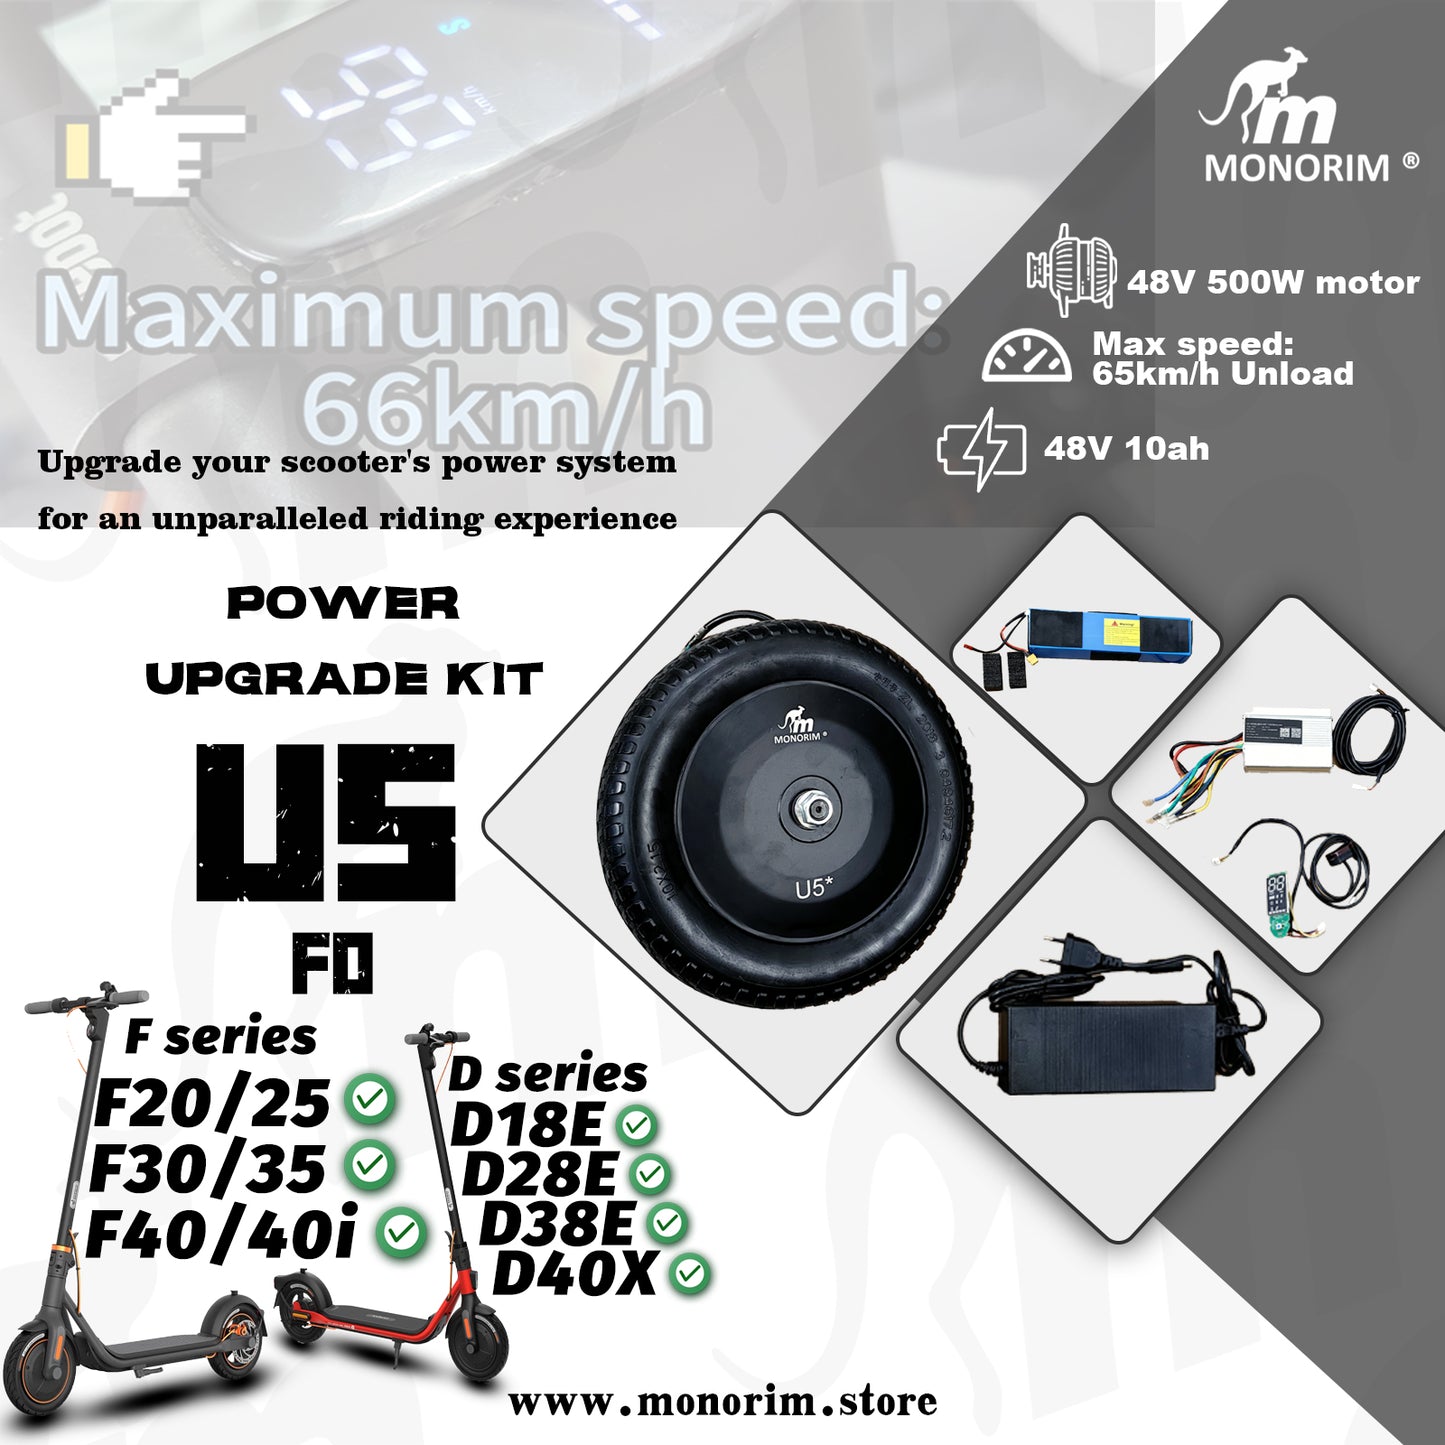 Monorim U5-F0 Upgrade Kit to be 500w 48v 10.4ah for segway  F25/30/30s/35/40e/65D18E/D28E/D38E/D40x Speed 65km/h